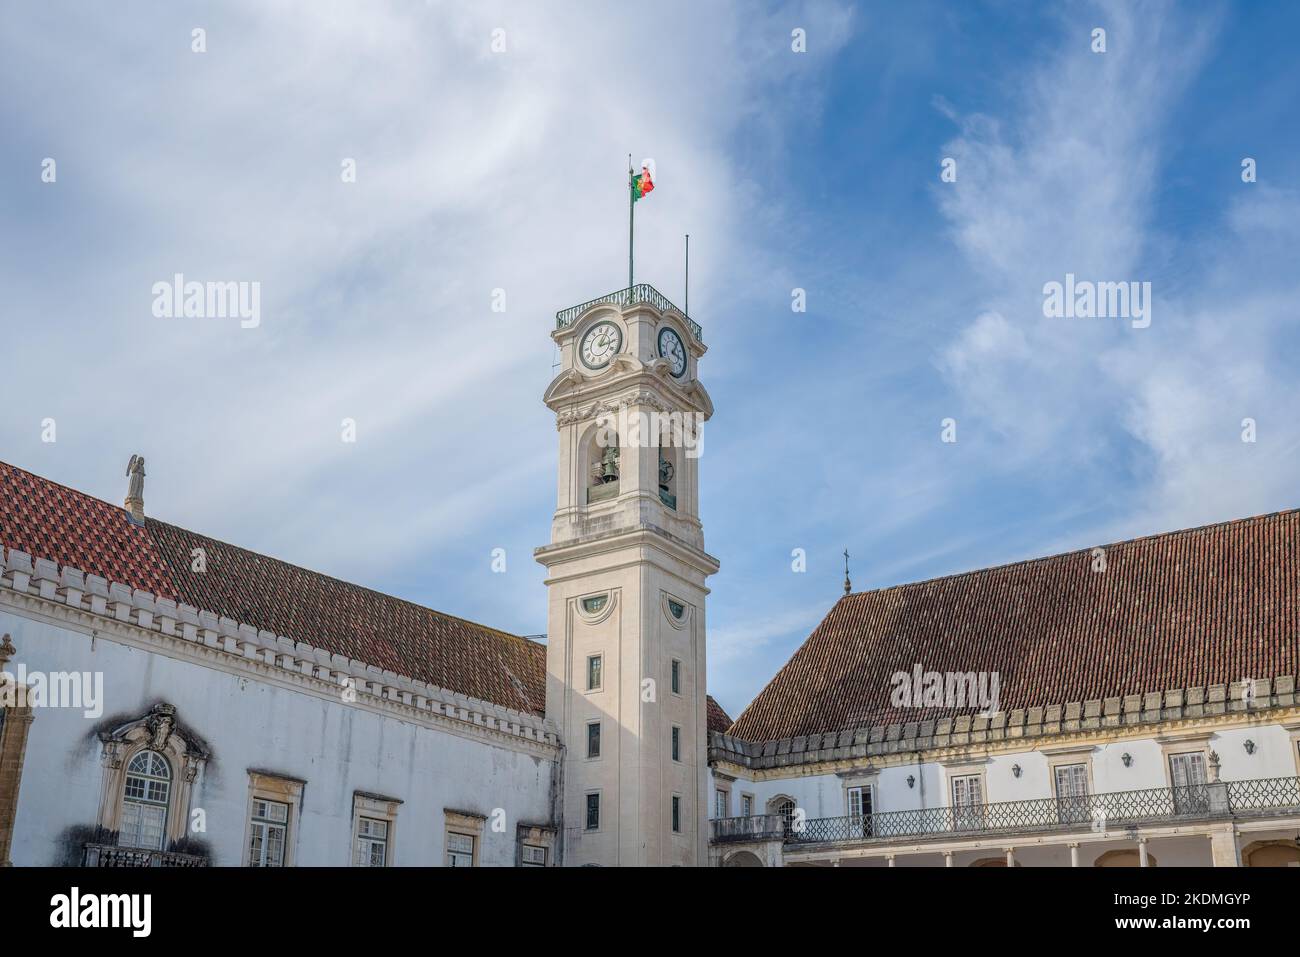 University Tower - Coimbra, Portugal Stock Photo